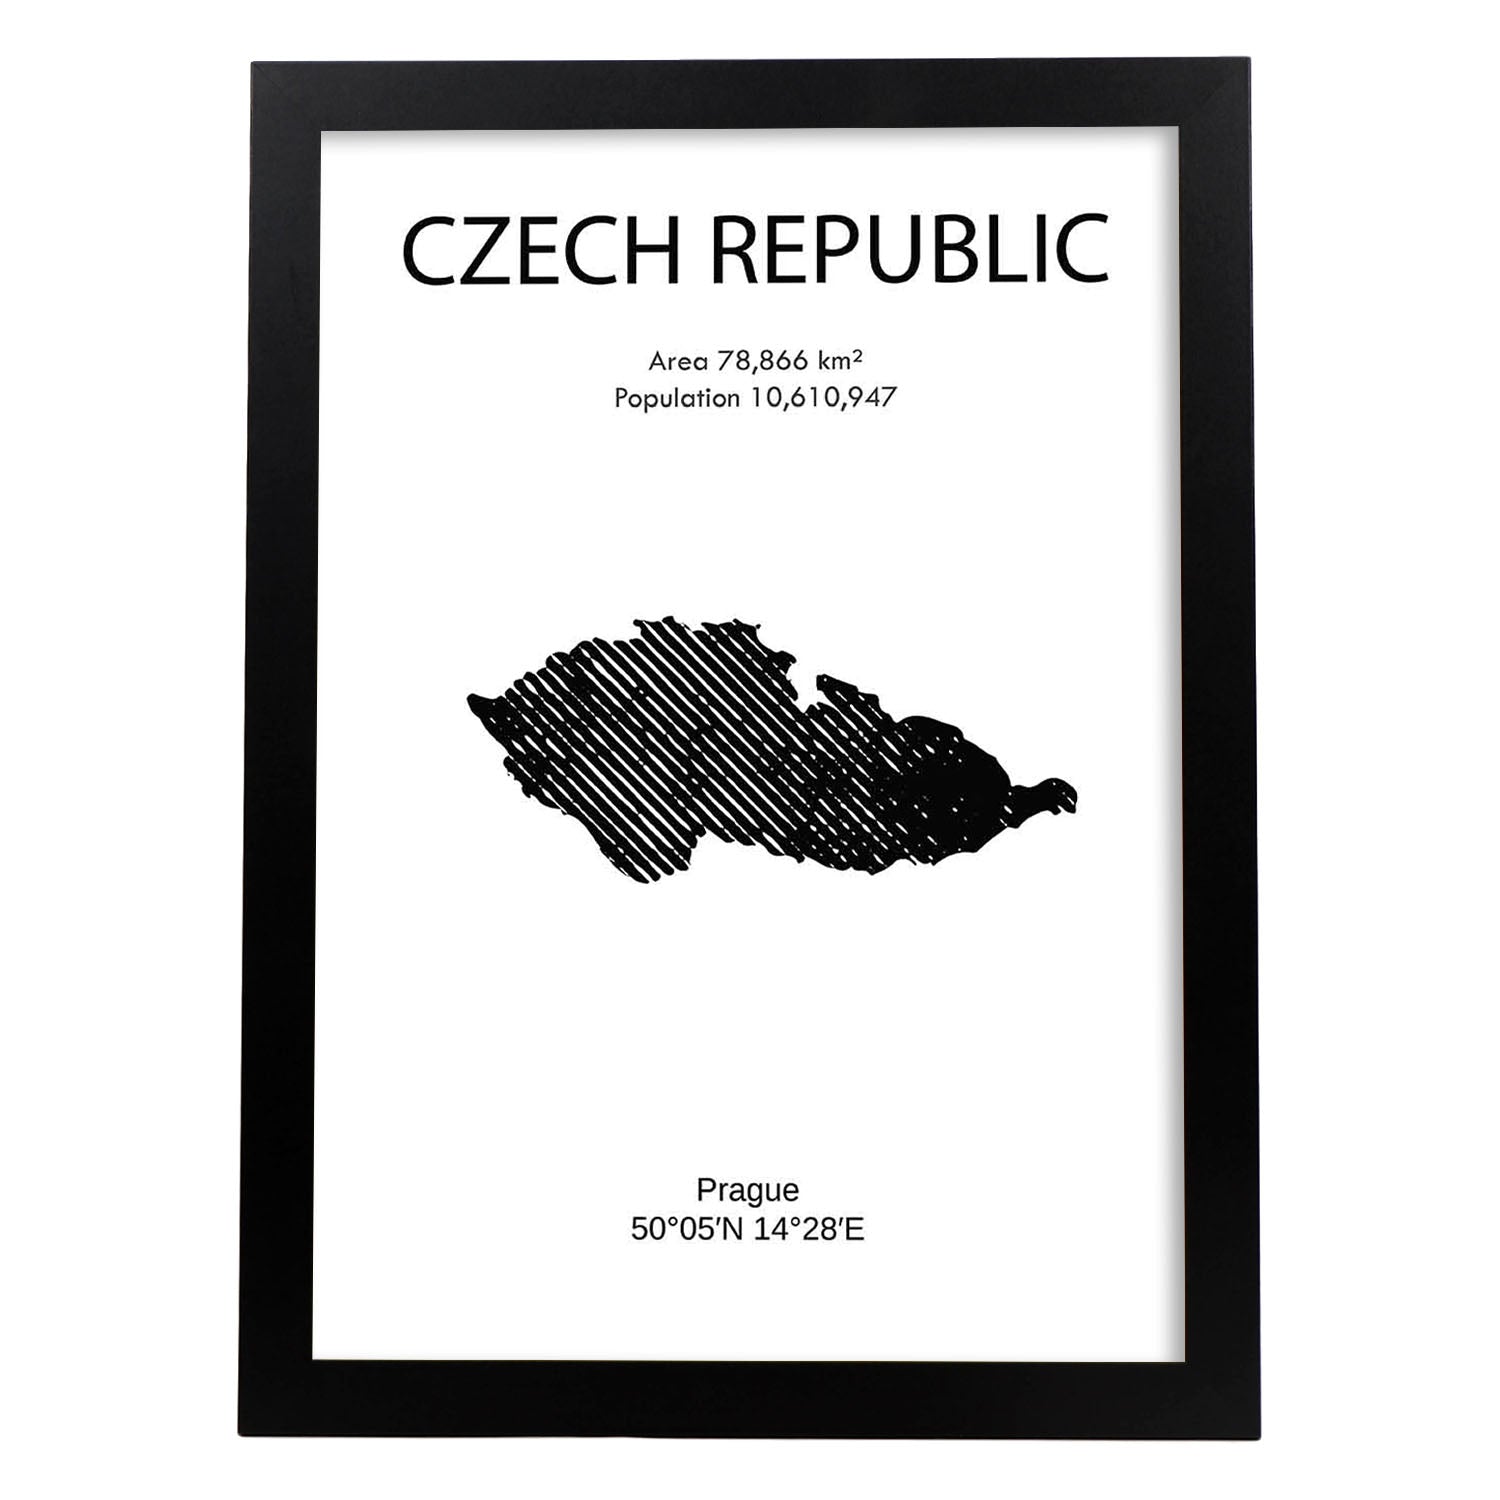 Poster de República Checa. Láminas de paises y continentes del mundo.-Artwork-Nacnic-A4-Marco Negro-Nacnic Estudio SL